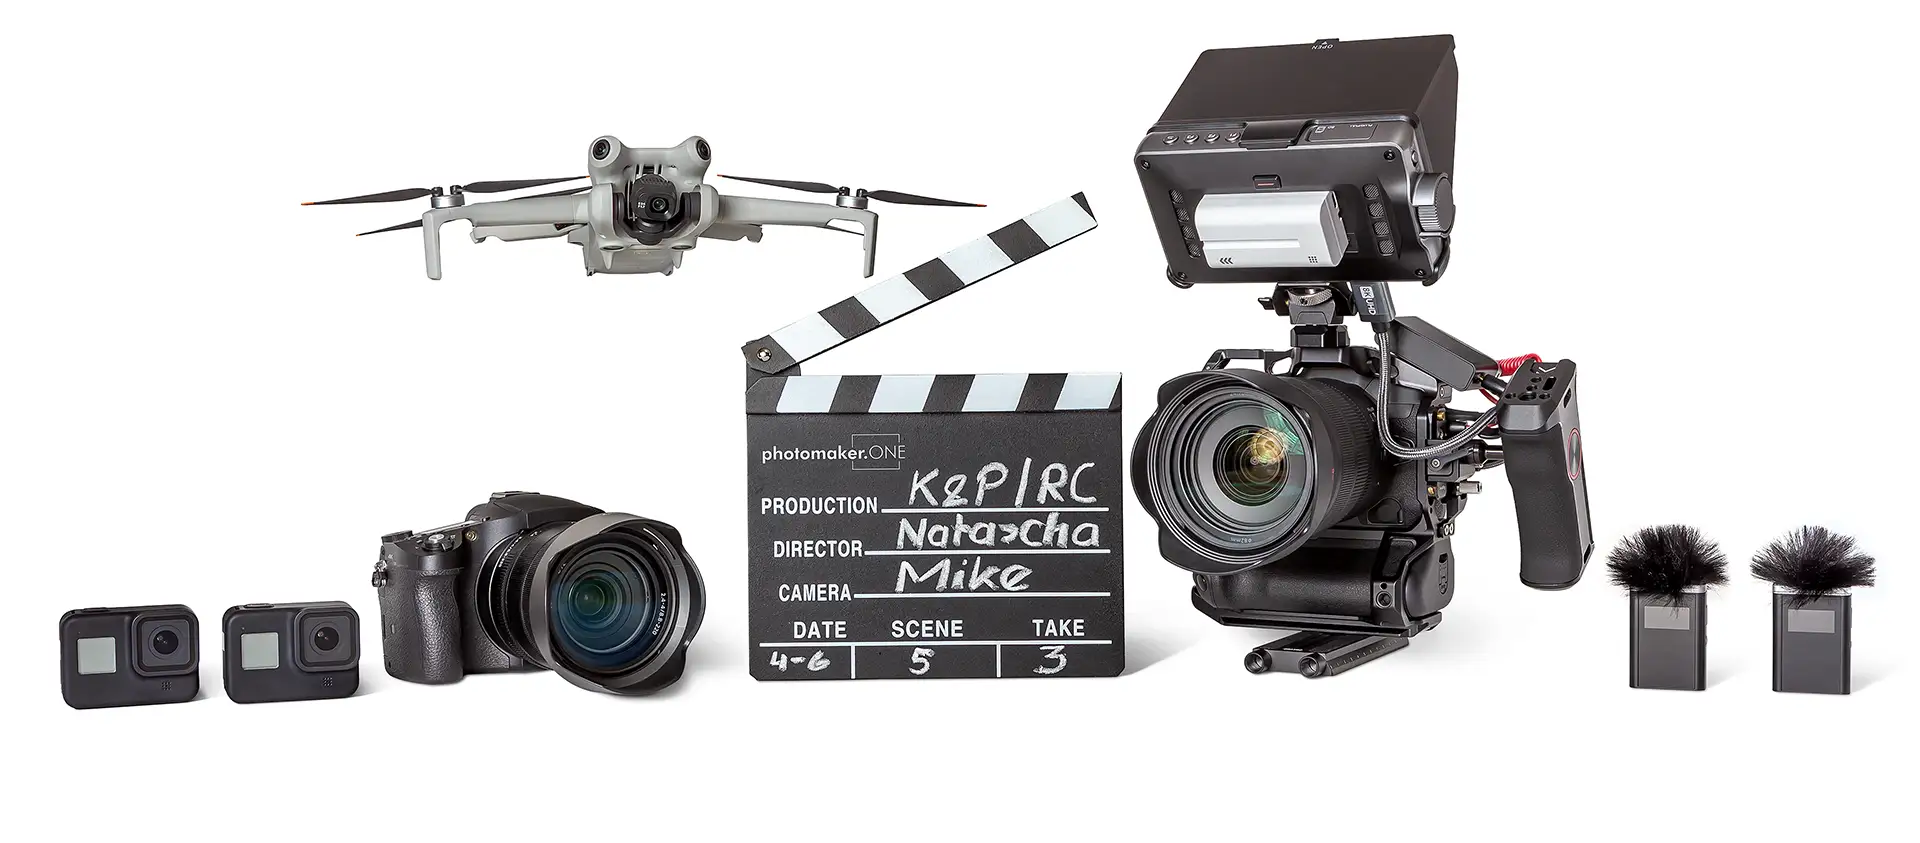 Videotechnik: Actioncams, Bridgekamera, Drohne, Filmklappe, Vollformatkamera, Mikrofone - Referenzen von Filmproduktionen, Videoproduktionen, Videodrehs und Postproduktionen